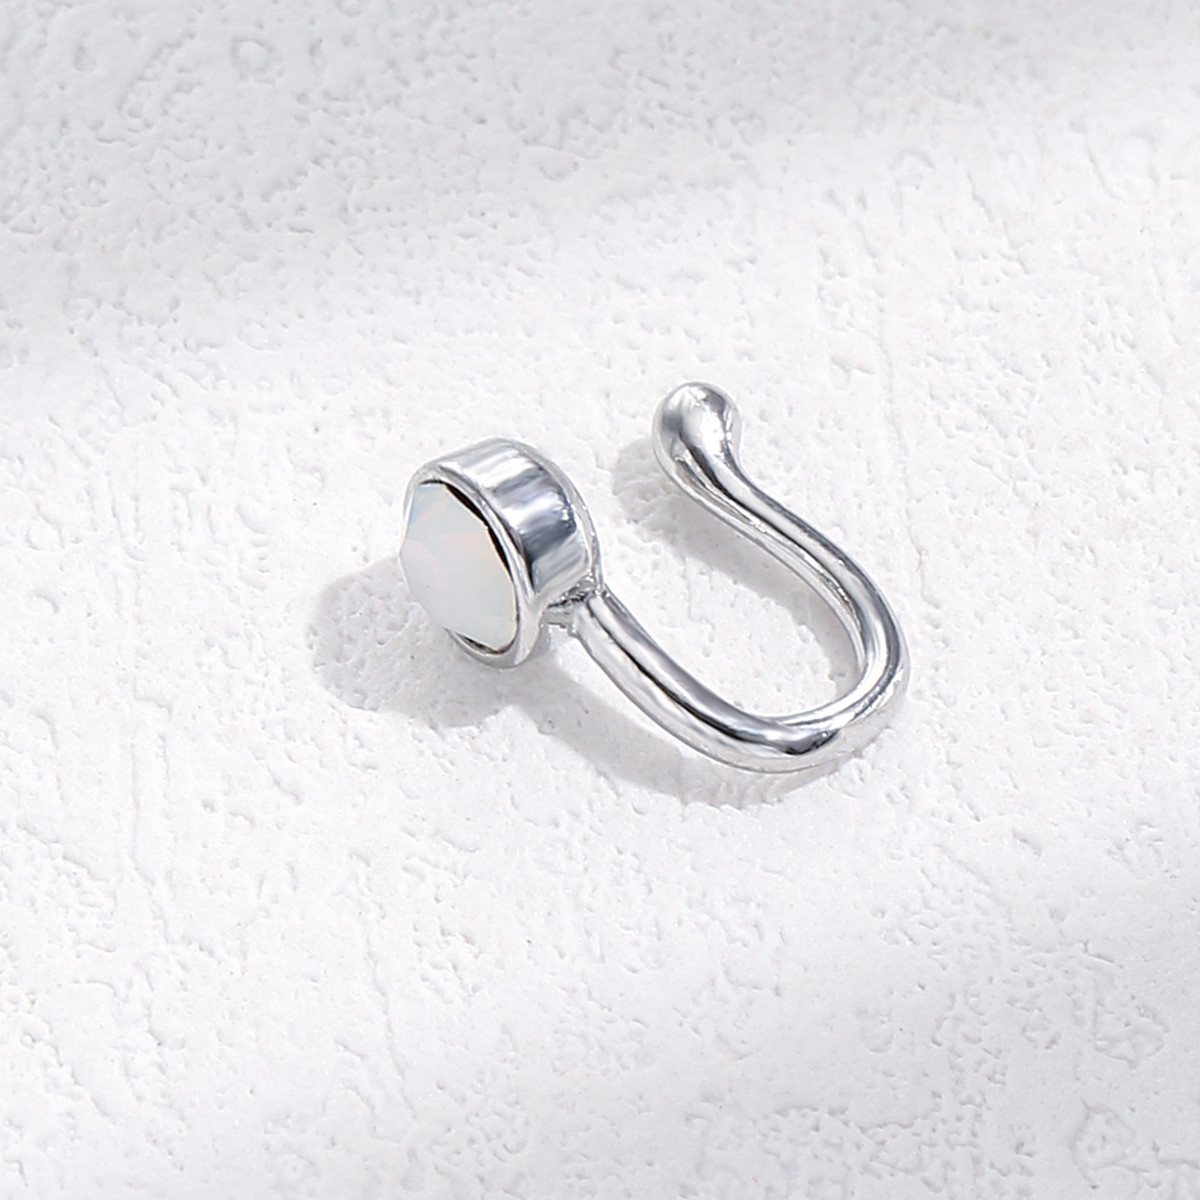 10pcs White Stone Gemstone Nose Clip Body Jewellery|GCJ336|UK SELLER